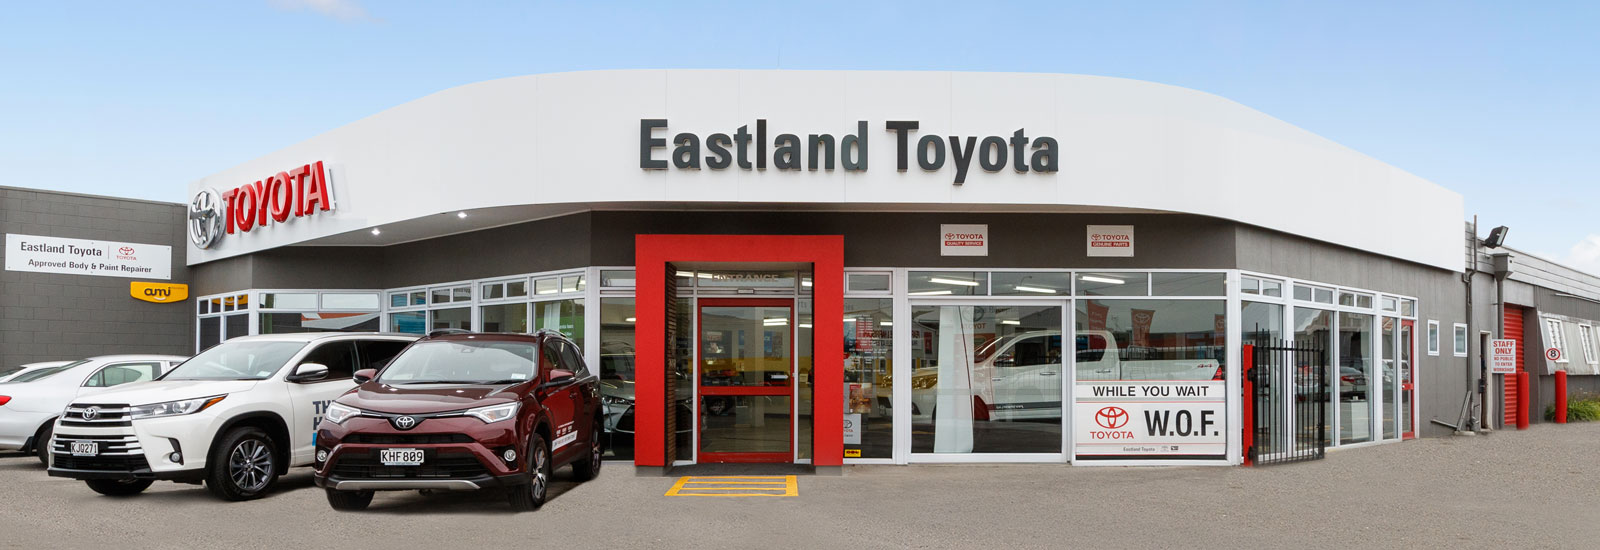 Eastland-Toyota-1600x550